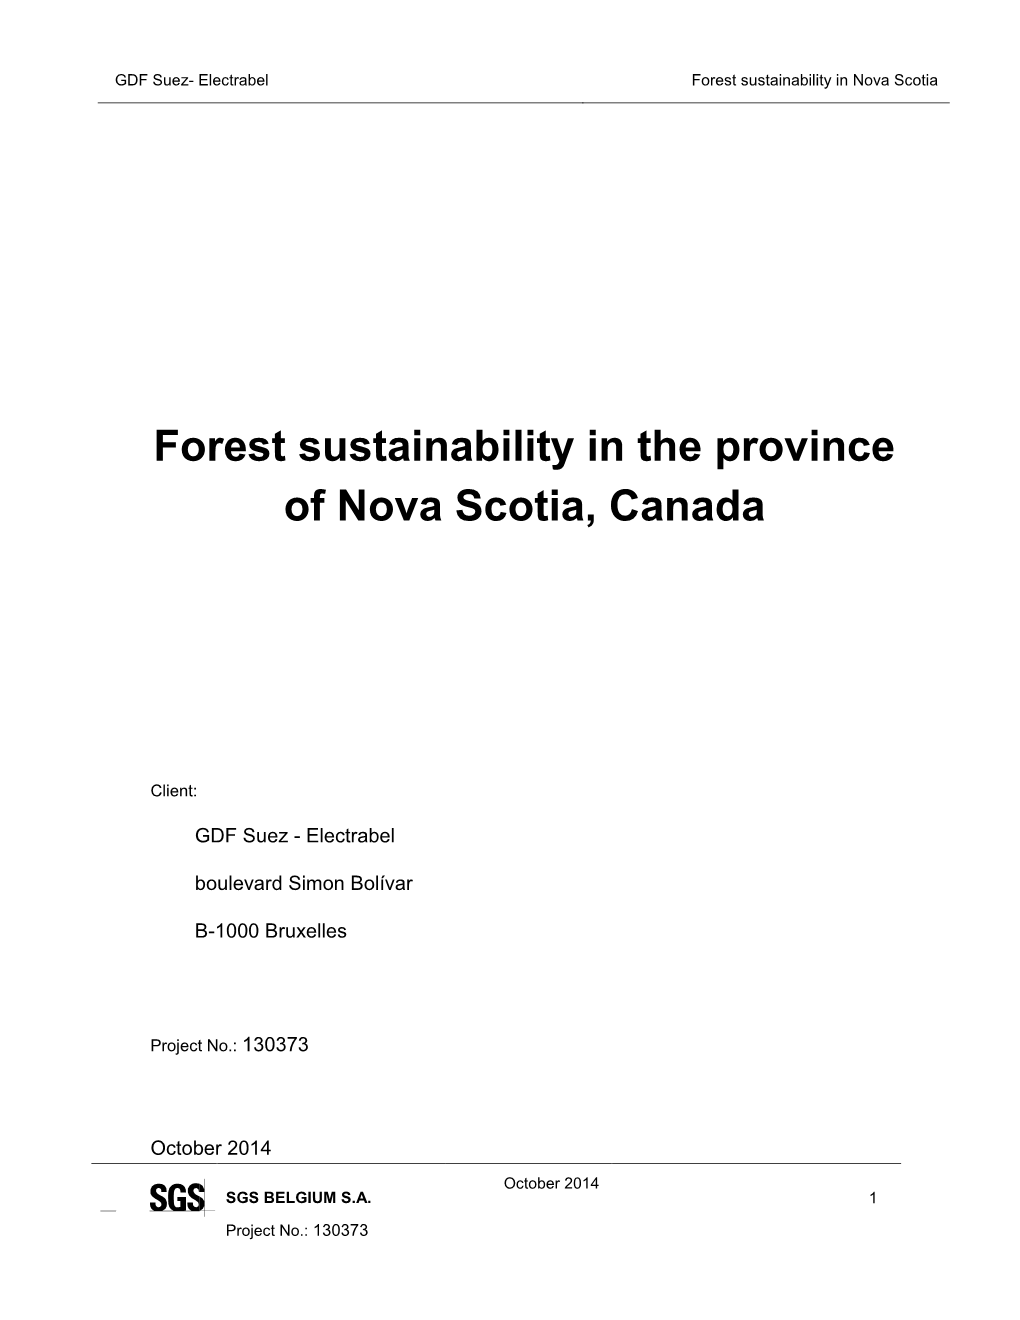 SGS Forest Sustainability in Nova Scotia